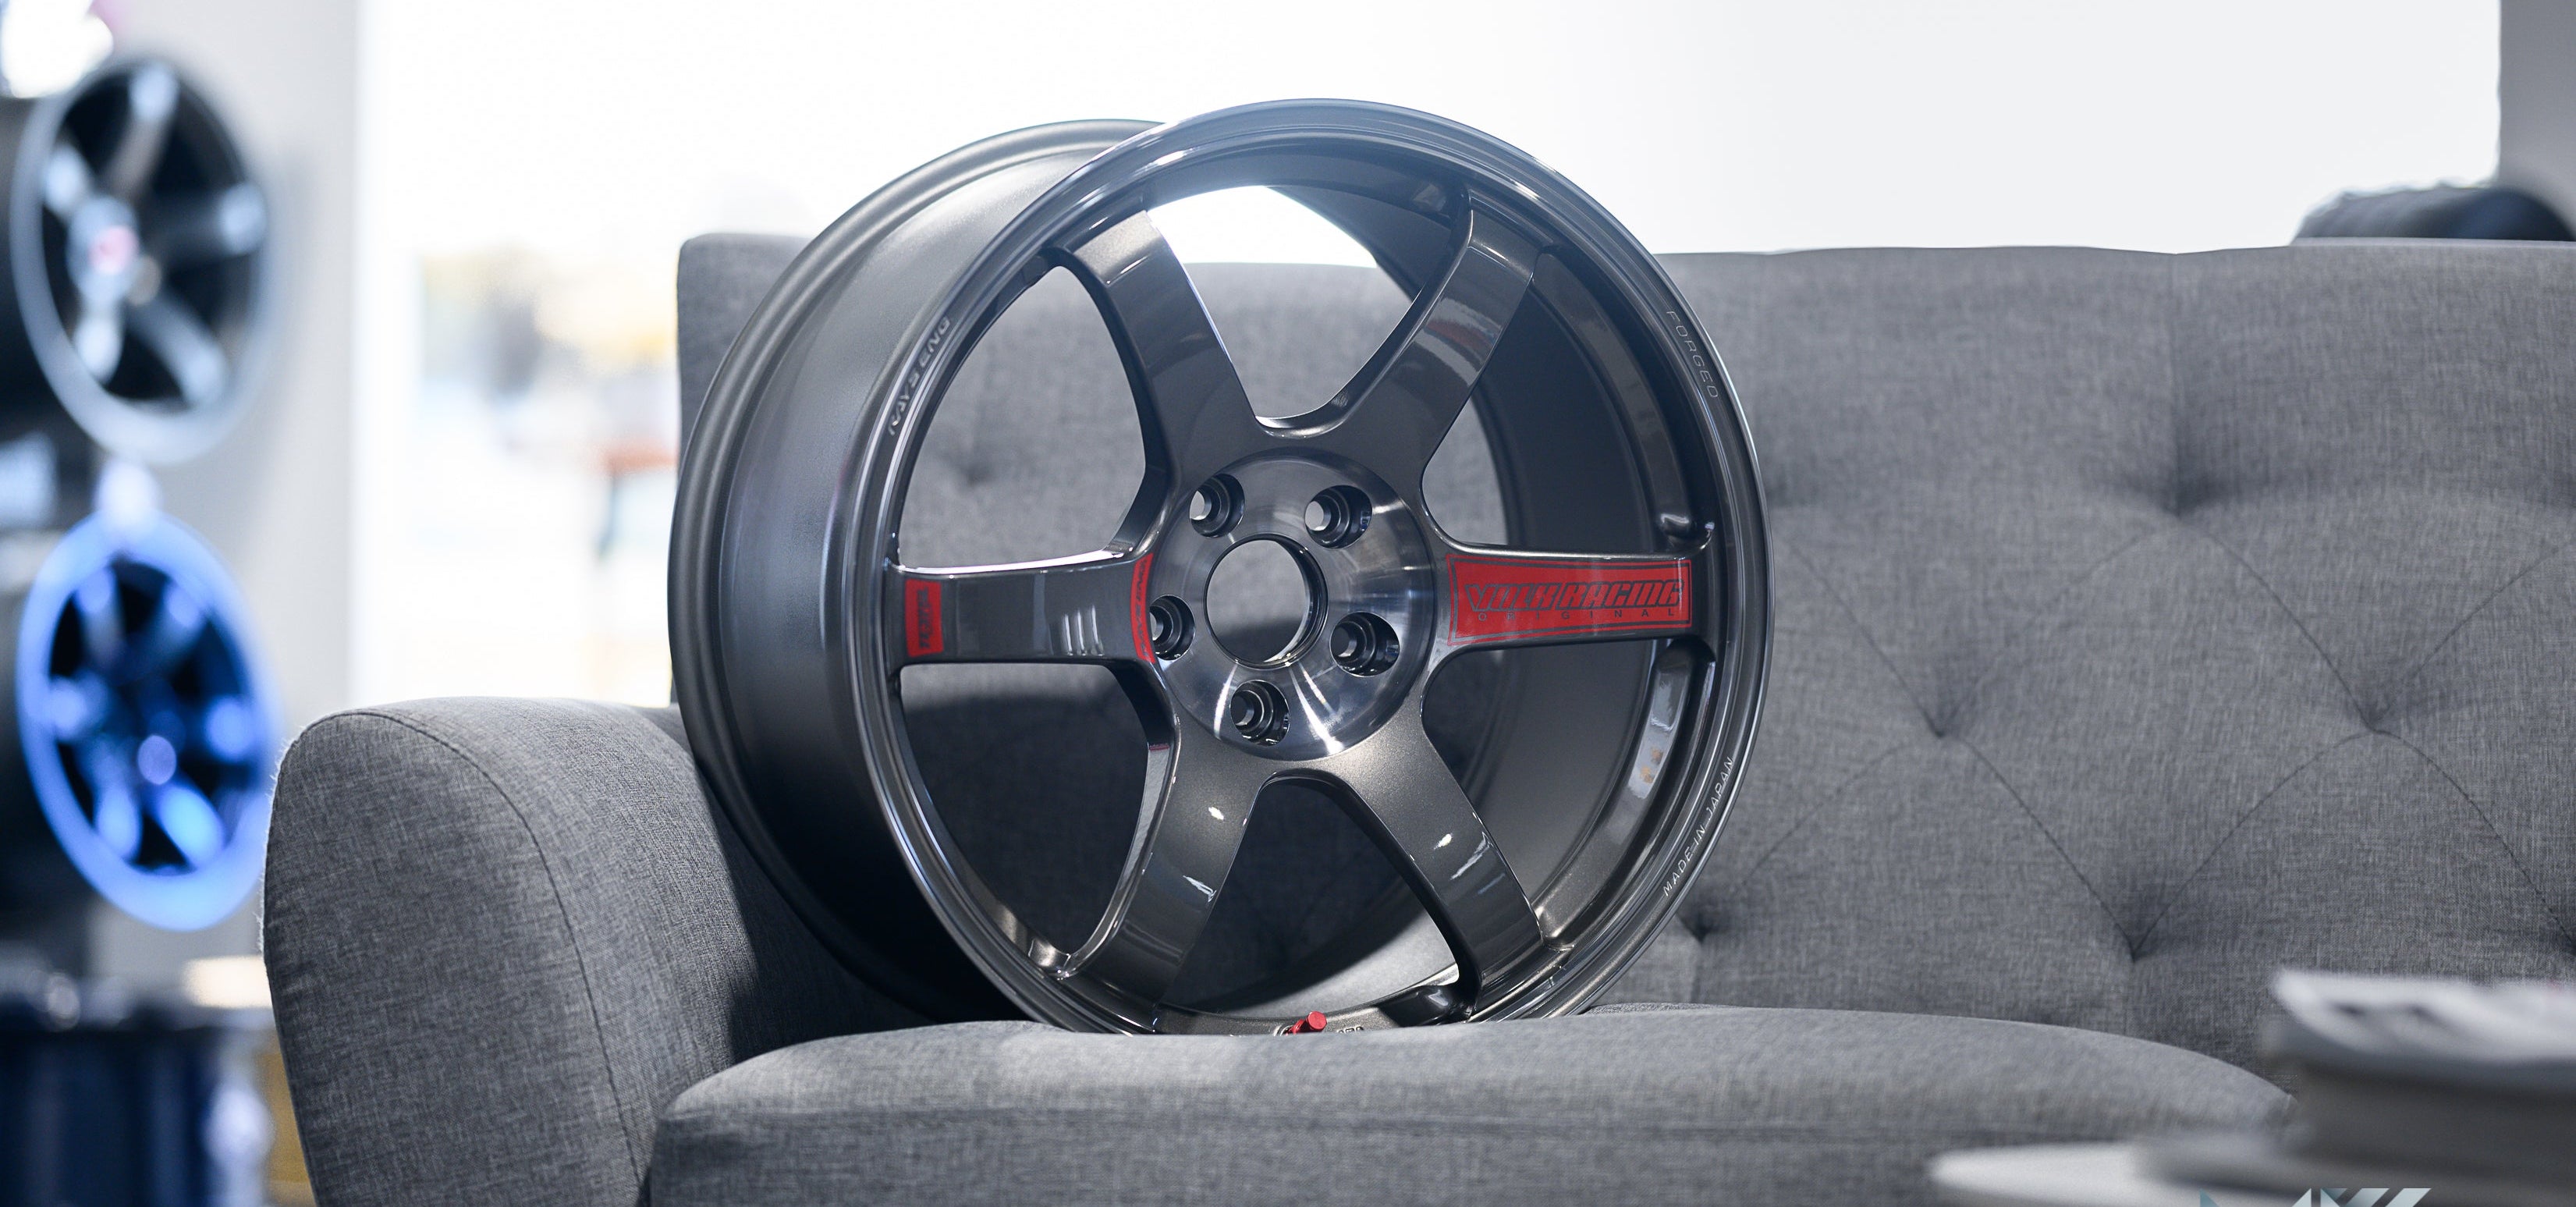 Volk Racing TE37 Saga SL - Premium Wheels from Volk Racing - From just $3850.00! Shop now at MK MOTORSPORTS